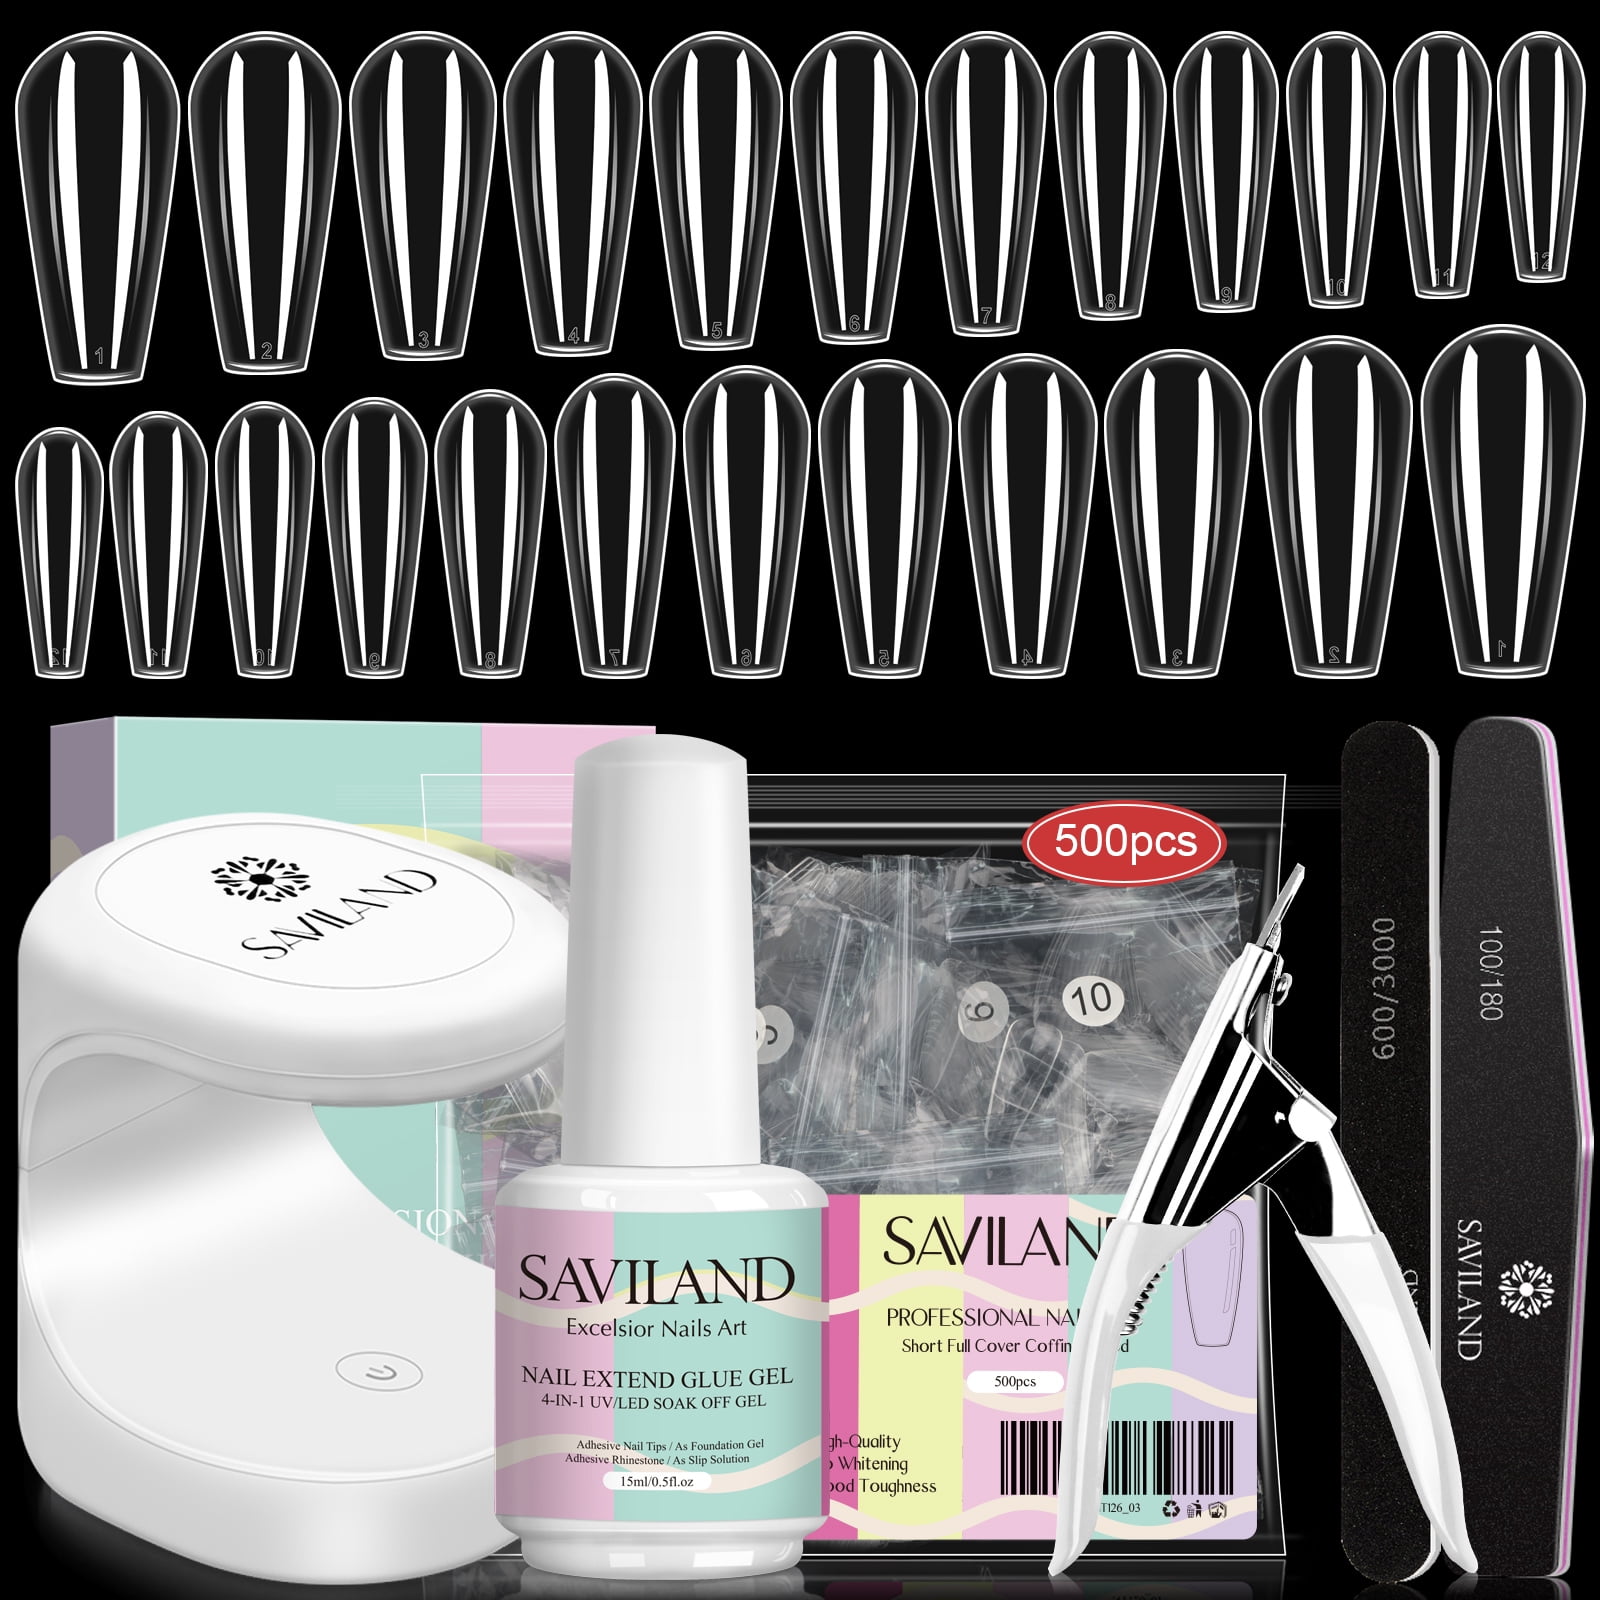 Saviland Nail Tip and Glue Gel Kit - Gel x Nail Kit with 500pcs Clear ...